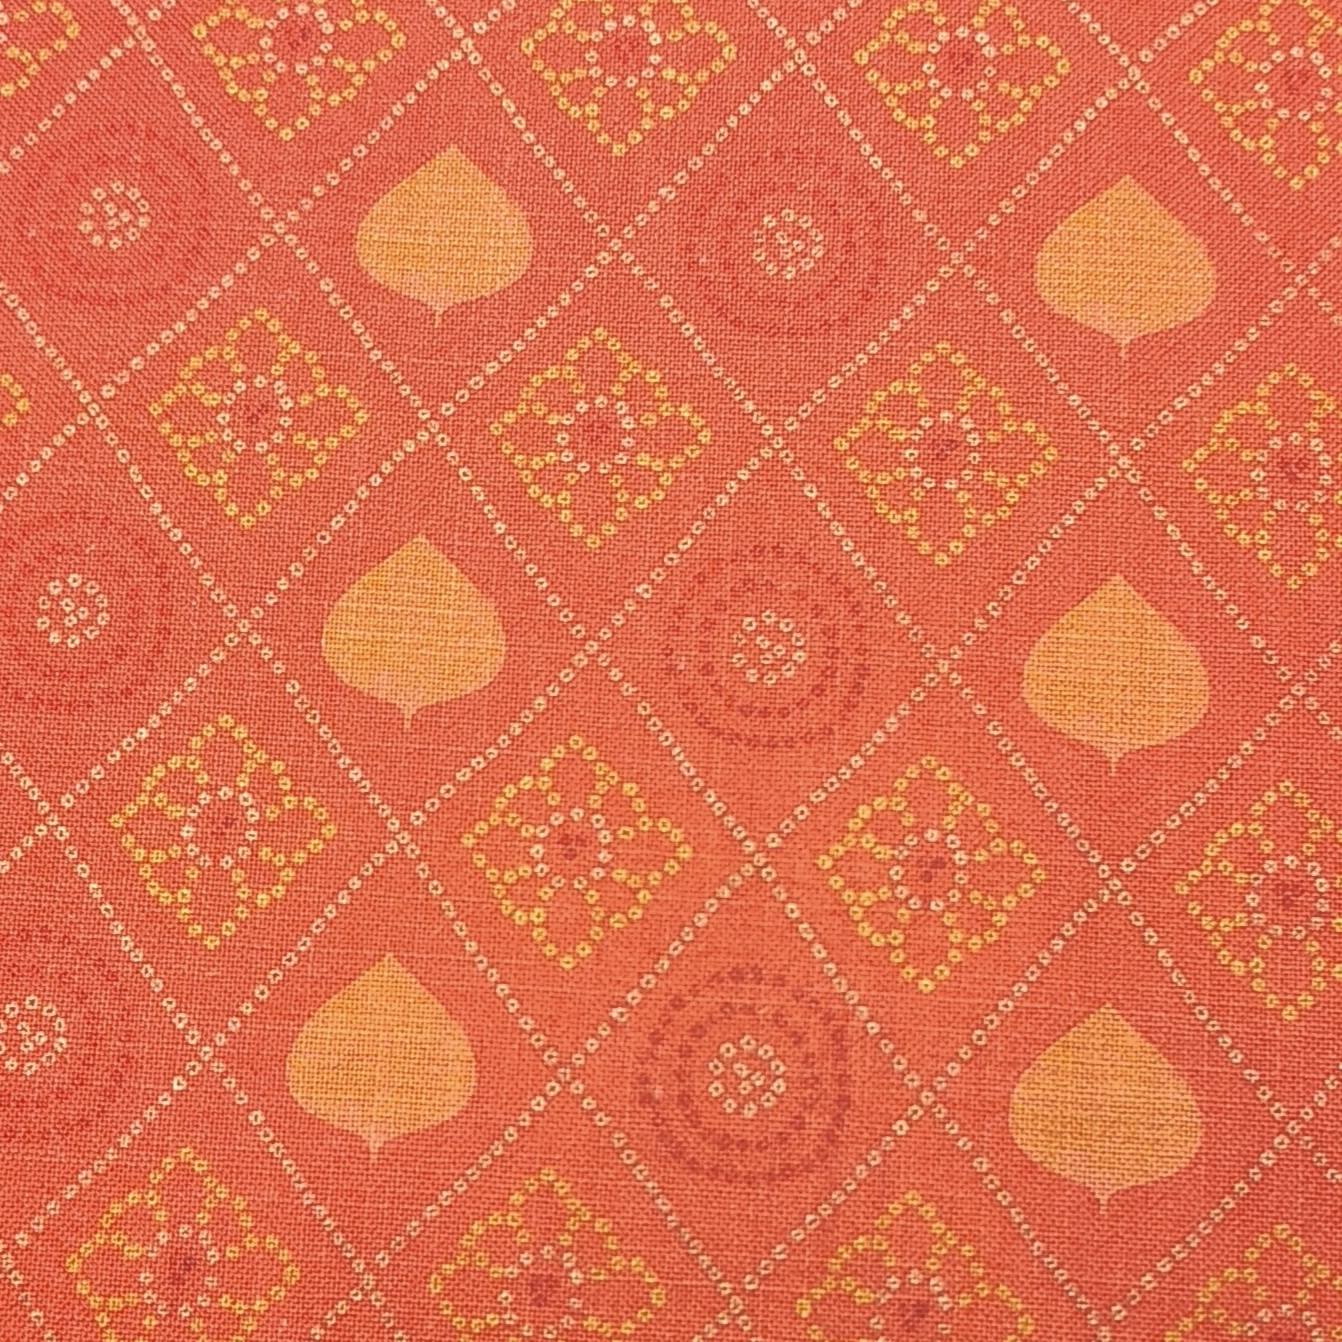 Mantire Special Cotton Blended Floral Chunari Fabric for shirt and short Kurta colour Dark orange